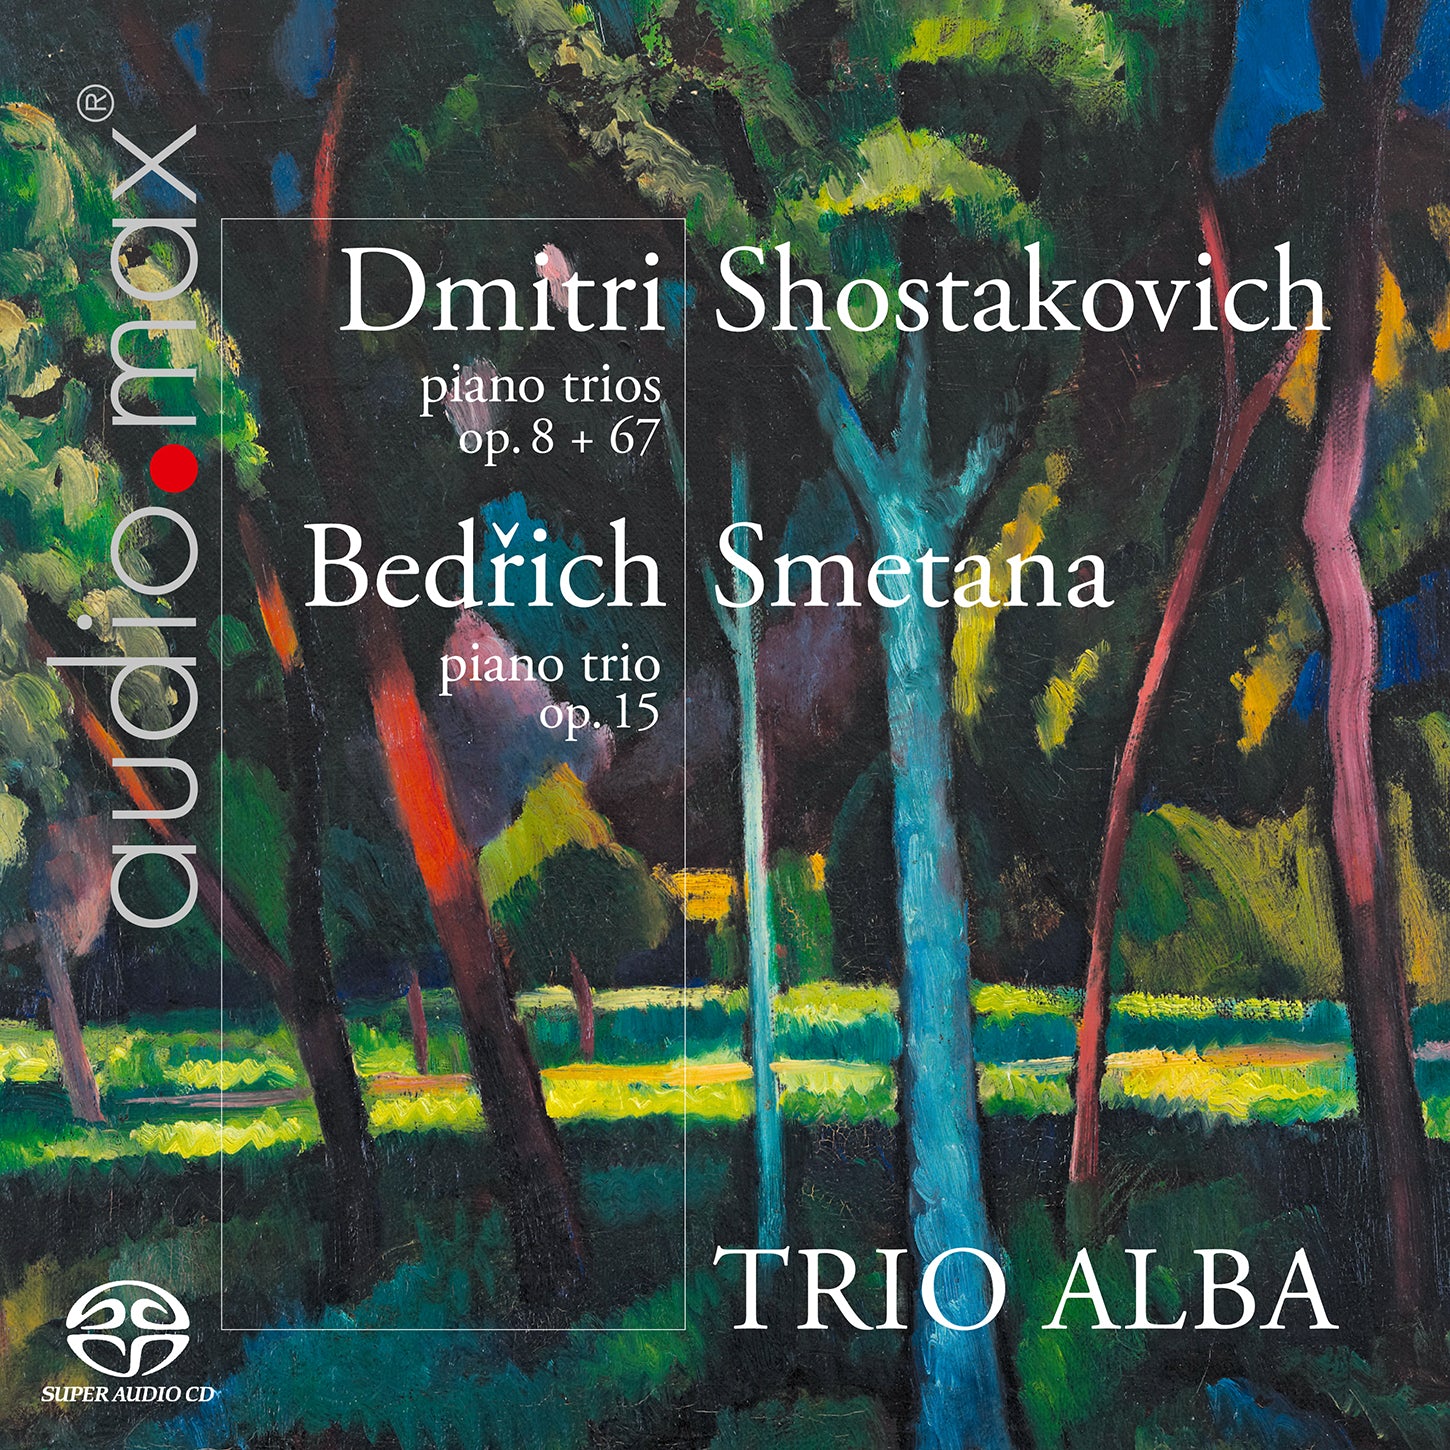 Shostakovich: Trios opp. 8 & 67 - Smetana: Trio op. 15 / Trio Alba